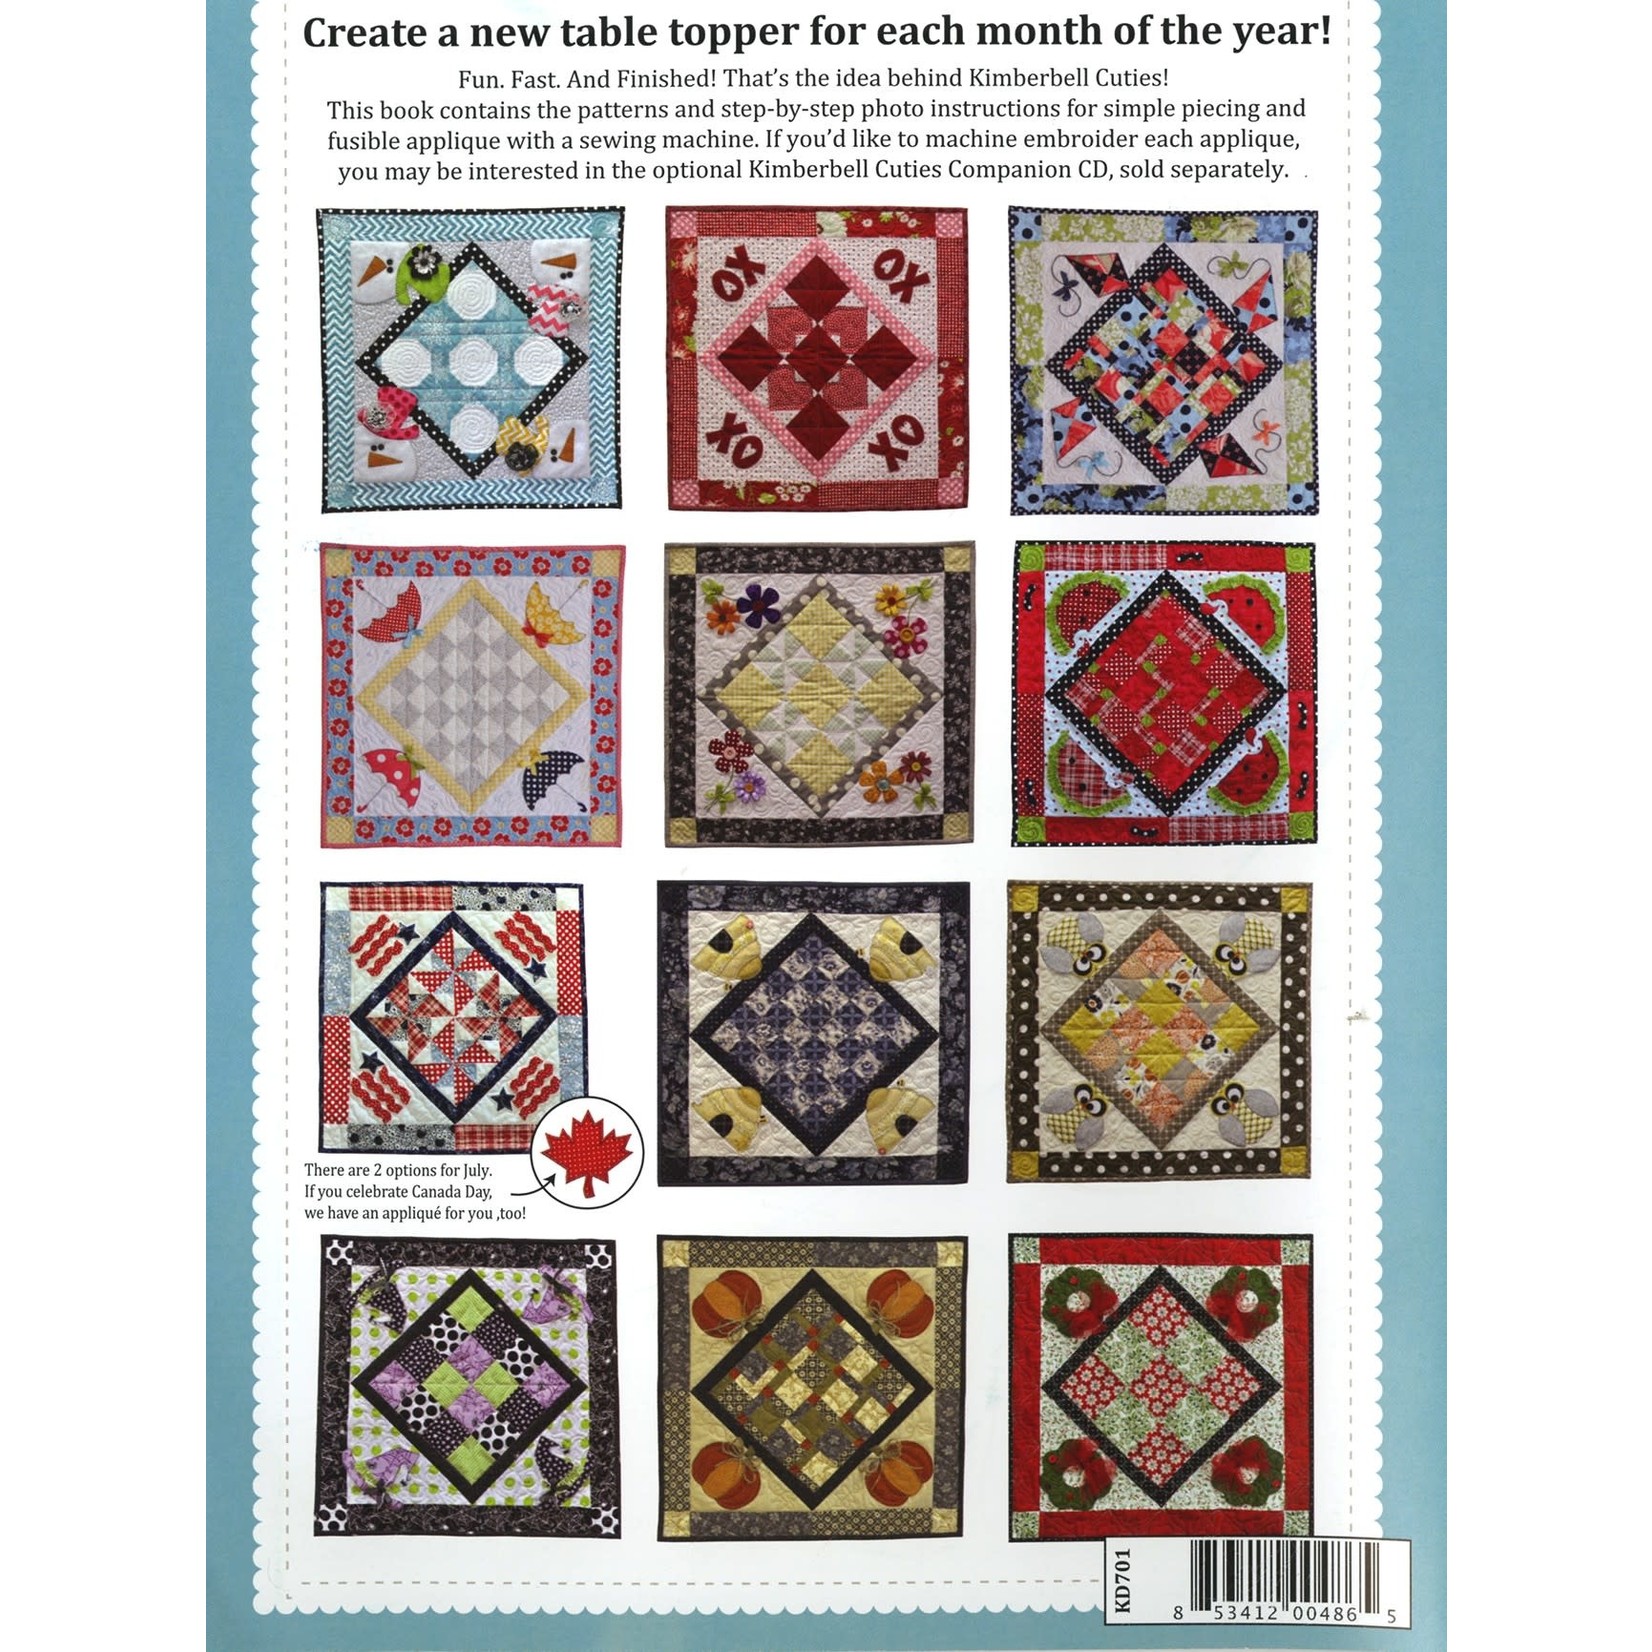 Kimberbell Designs Kimberbell Cuties: 12 Seasonal Table Toppers Pattern Book